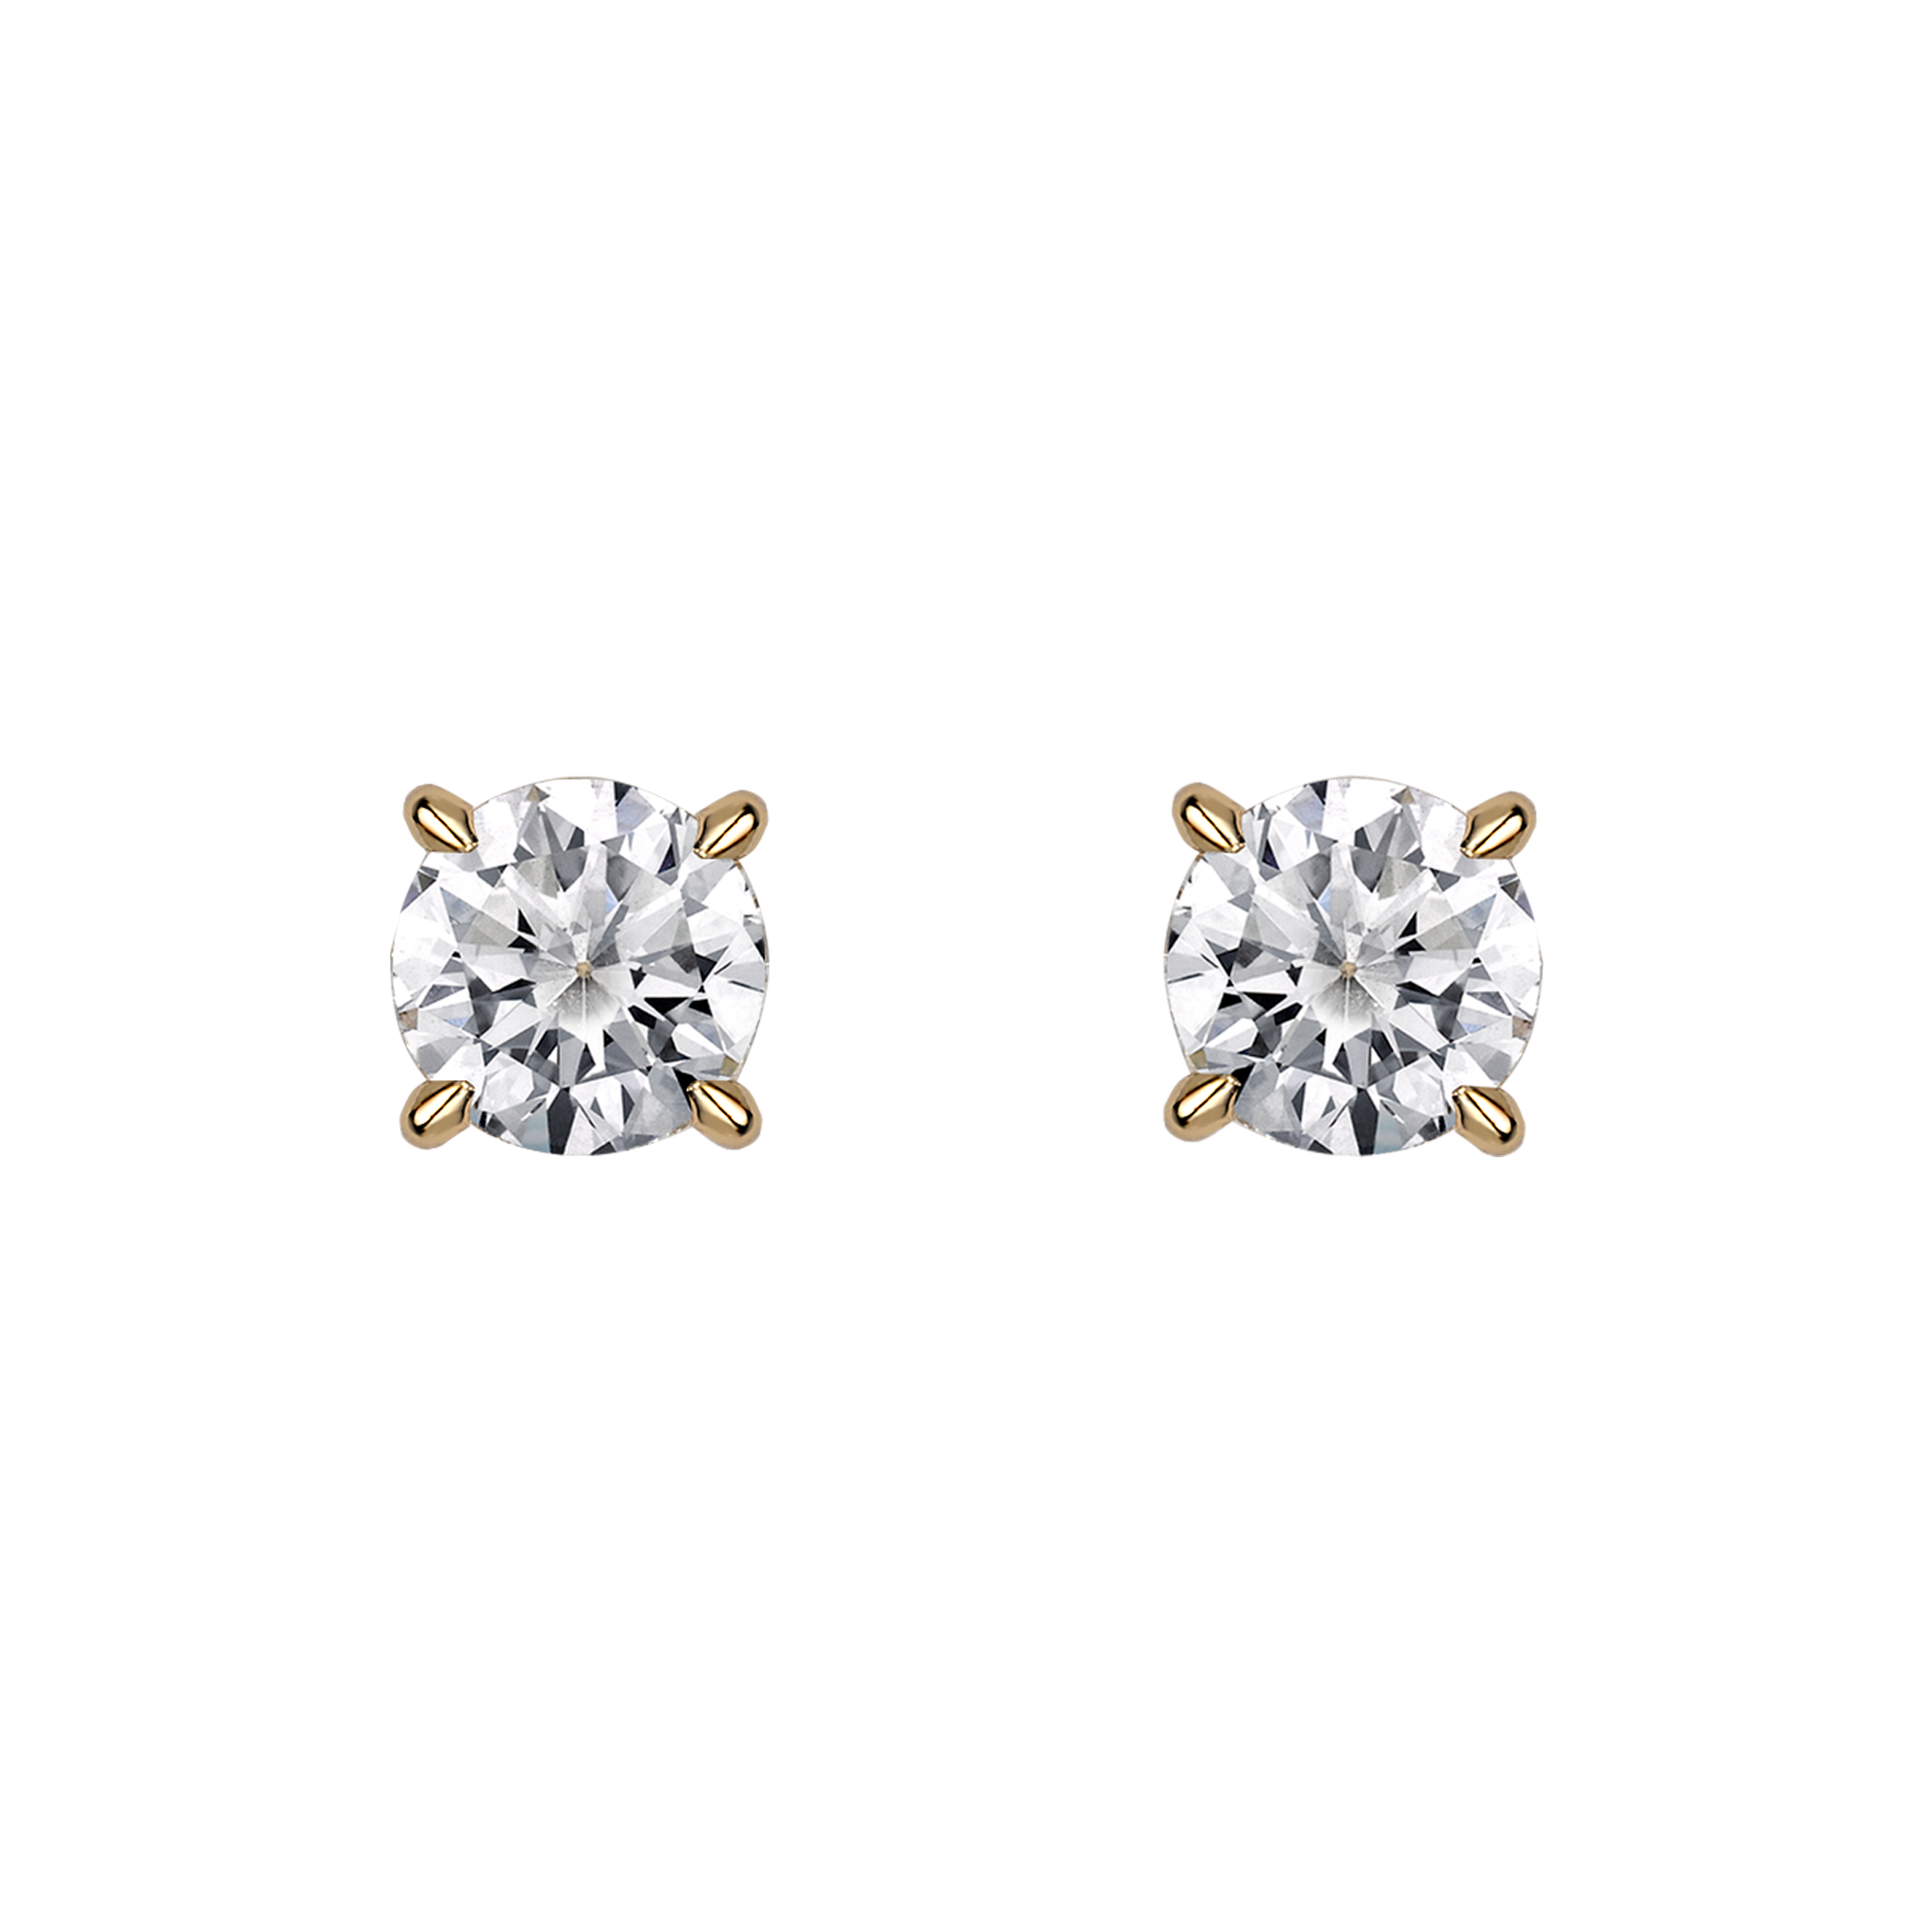 Brilliant Cut Diamond Earrings Stud Earrings with 4 Claw Setting_1